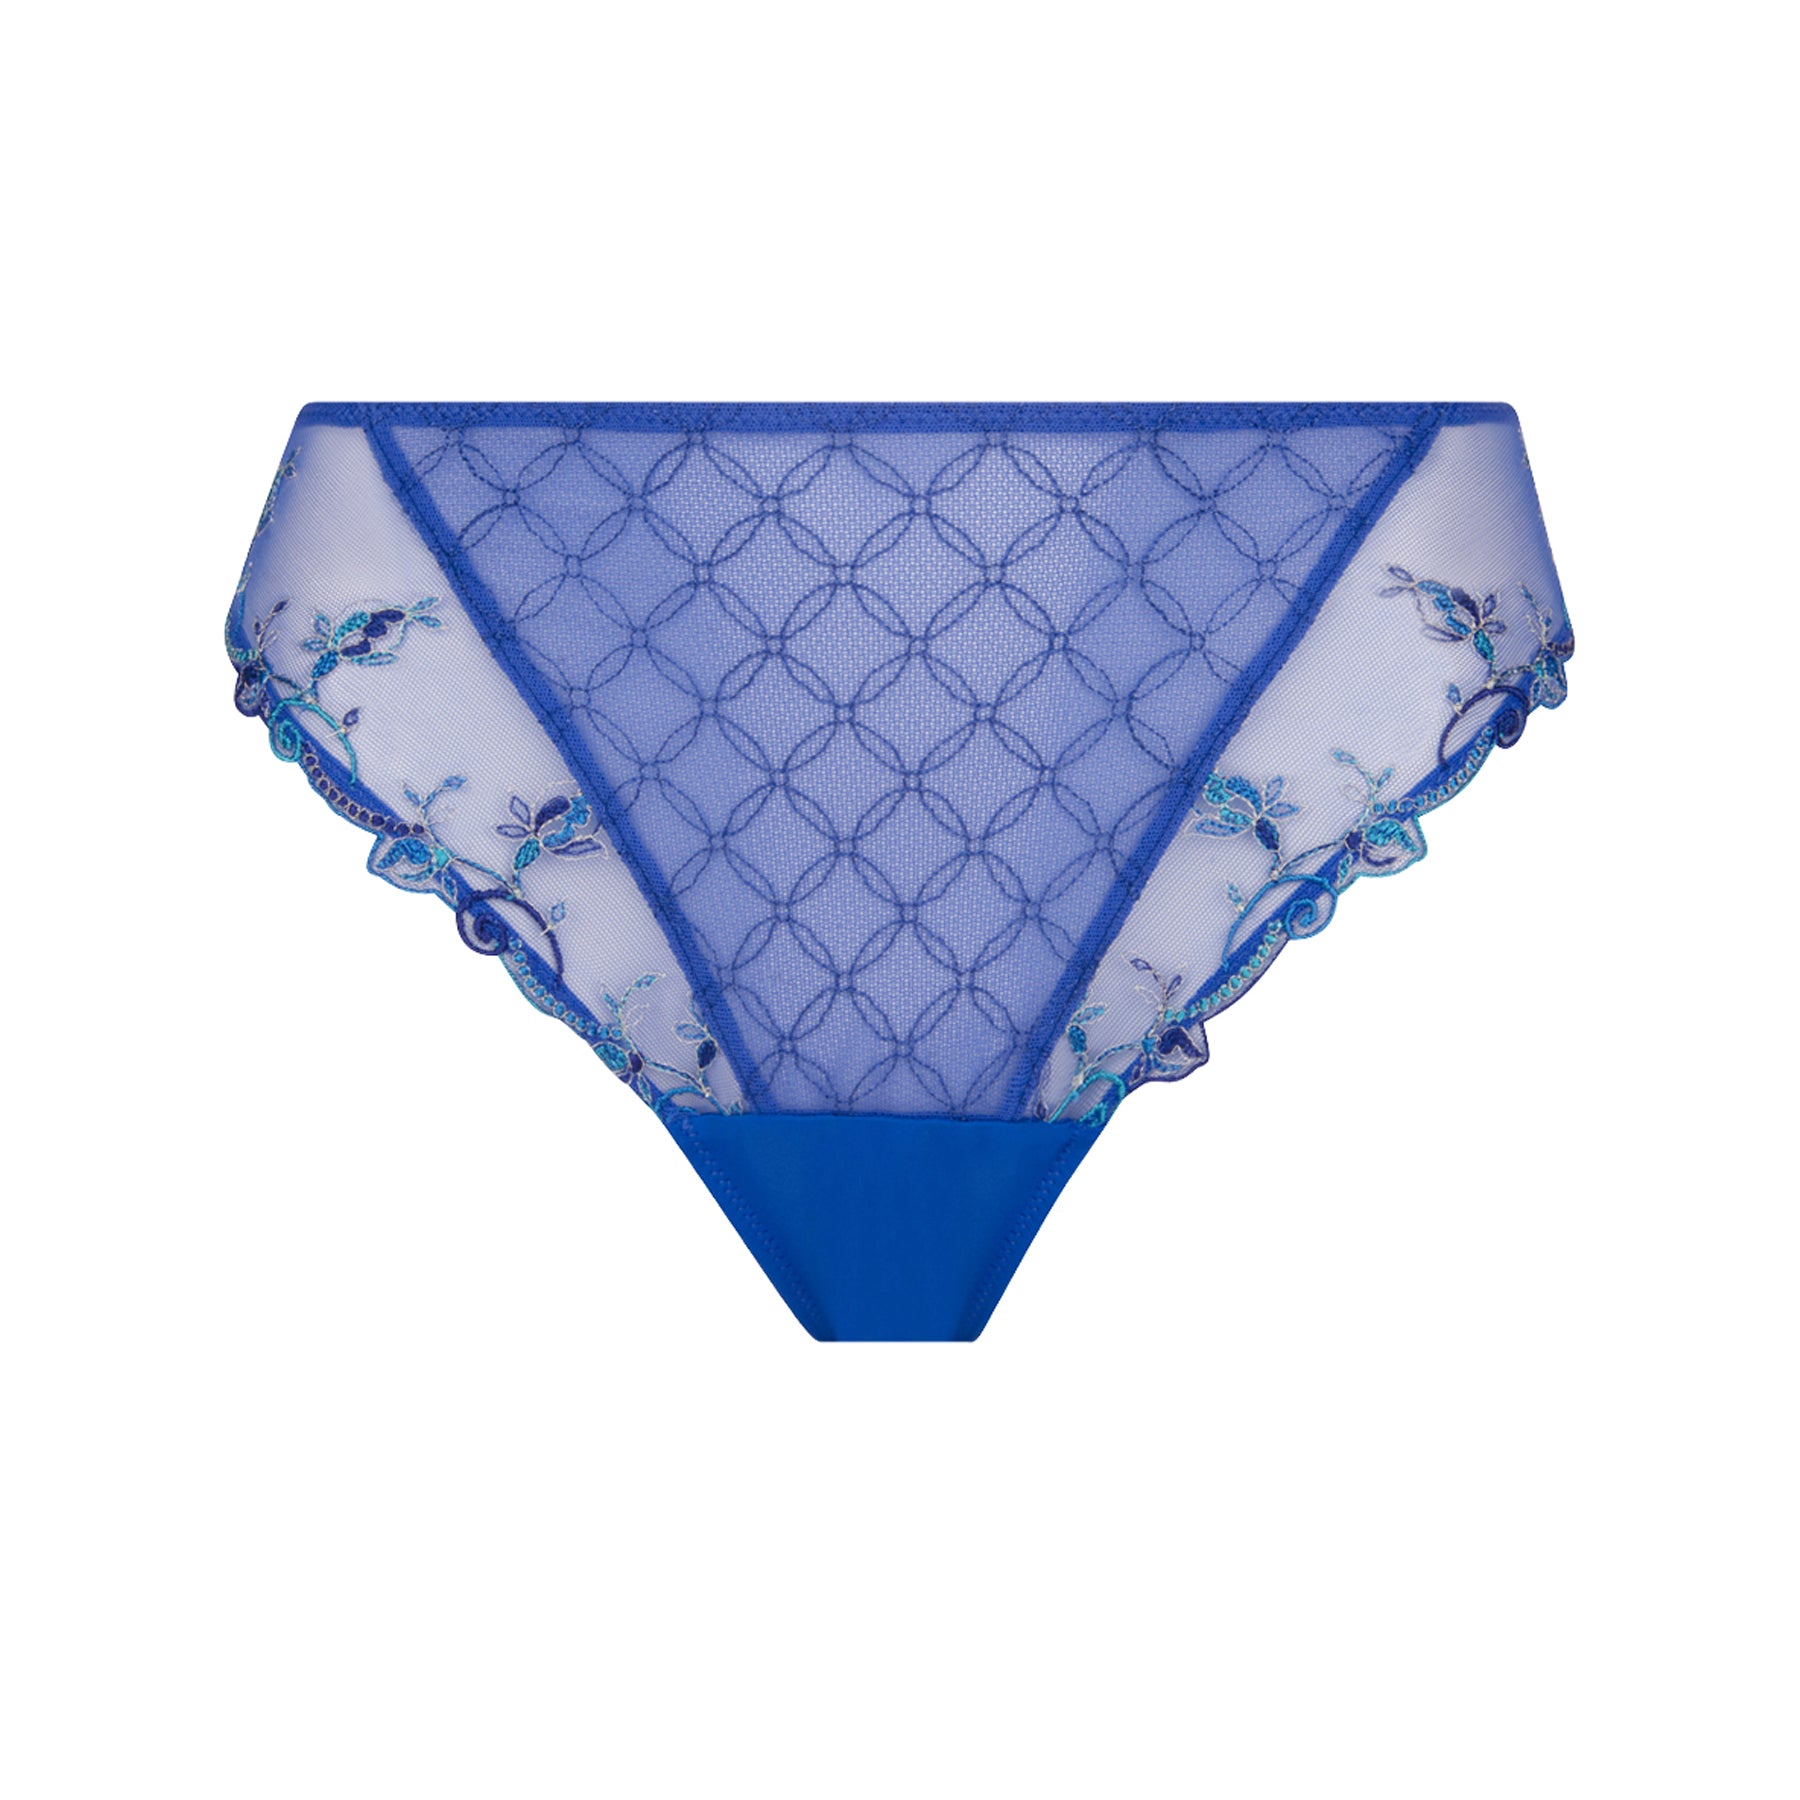 St. Eve Micro Bikini Panties Nylon/Spandex 2 Pk Blue Stripe/Navy - U Pick  Size